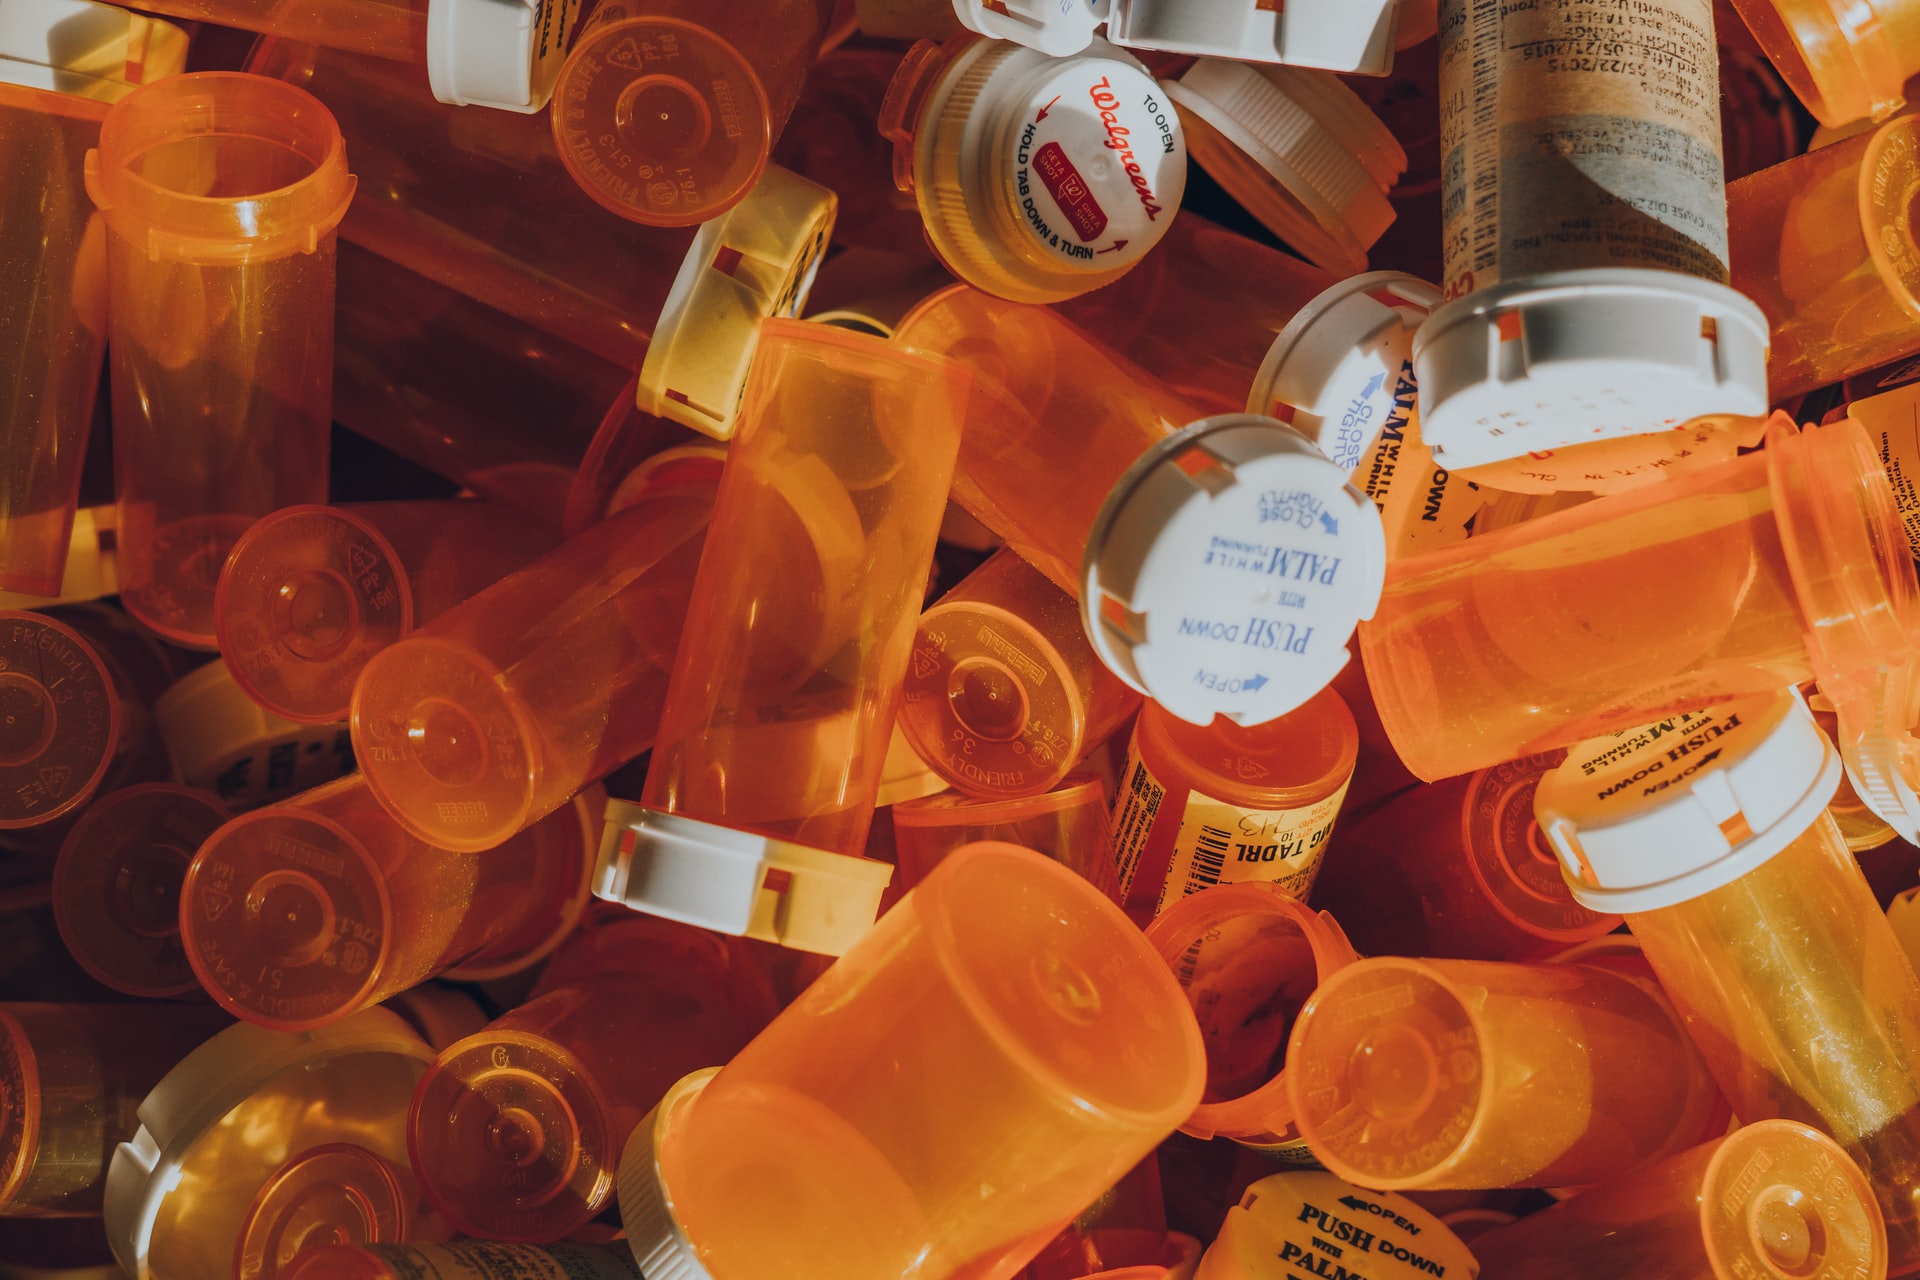 A photo of a pile of prescription pill bottles.